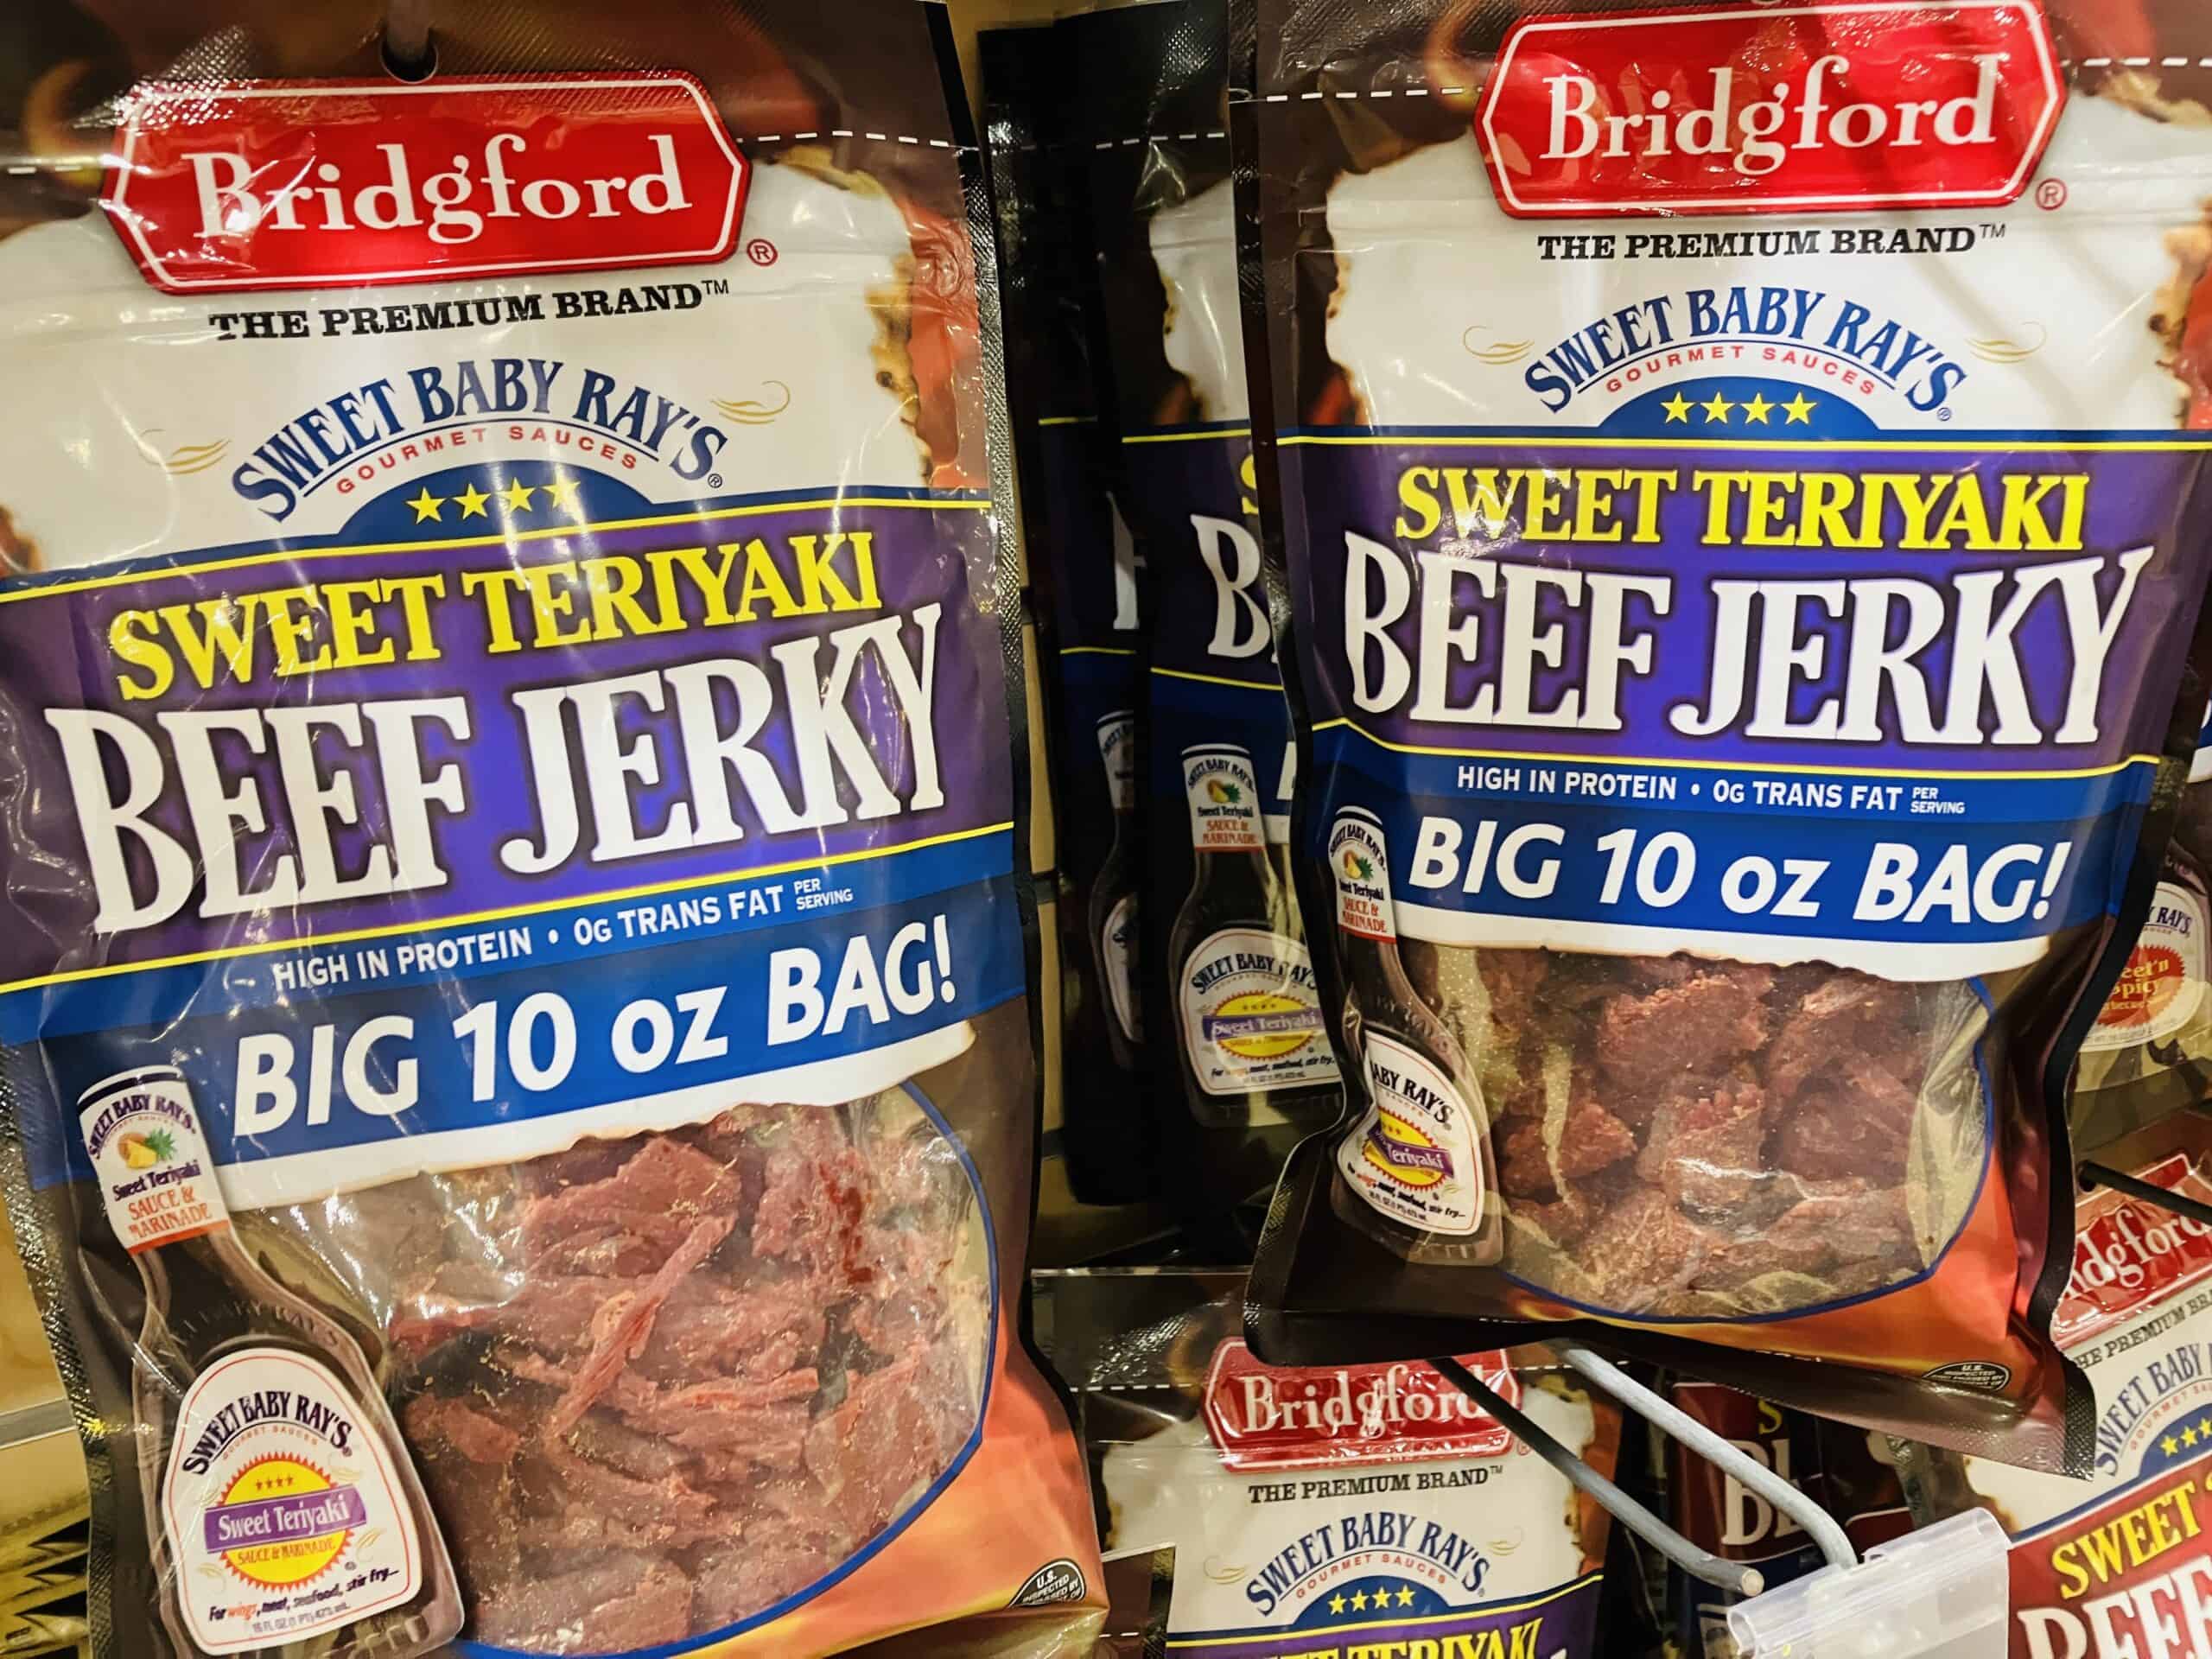 Bridgford beef jerky